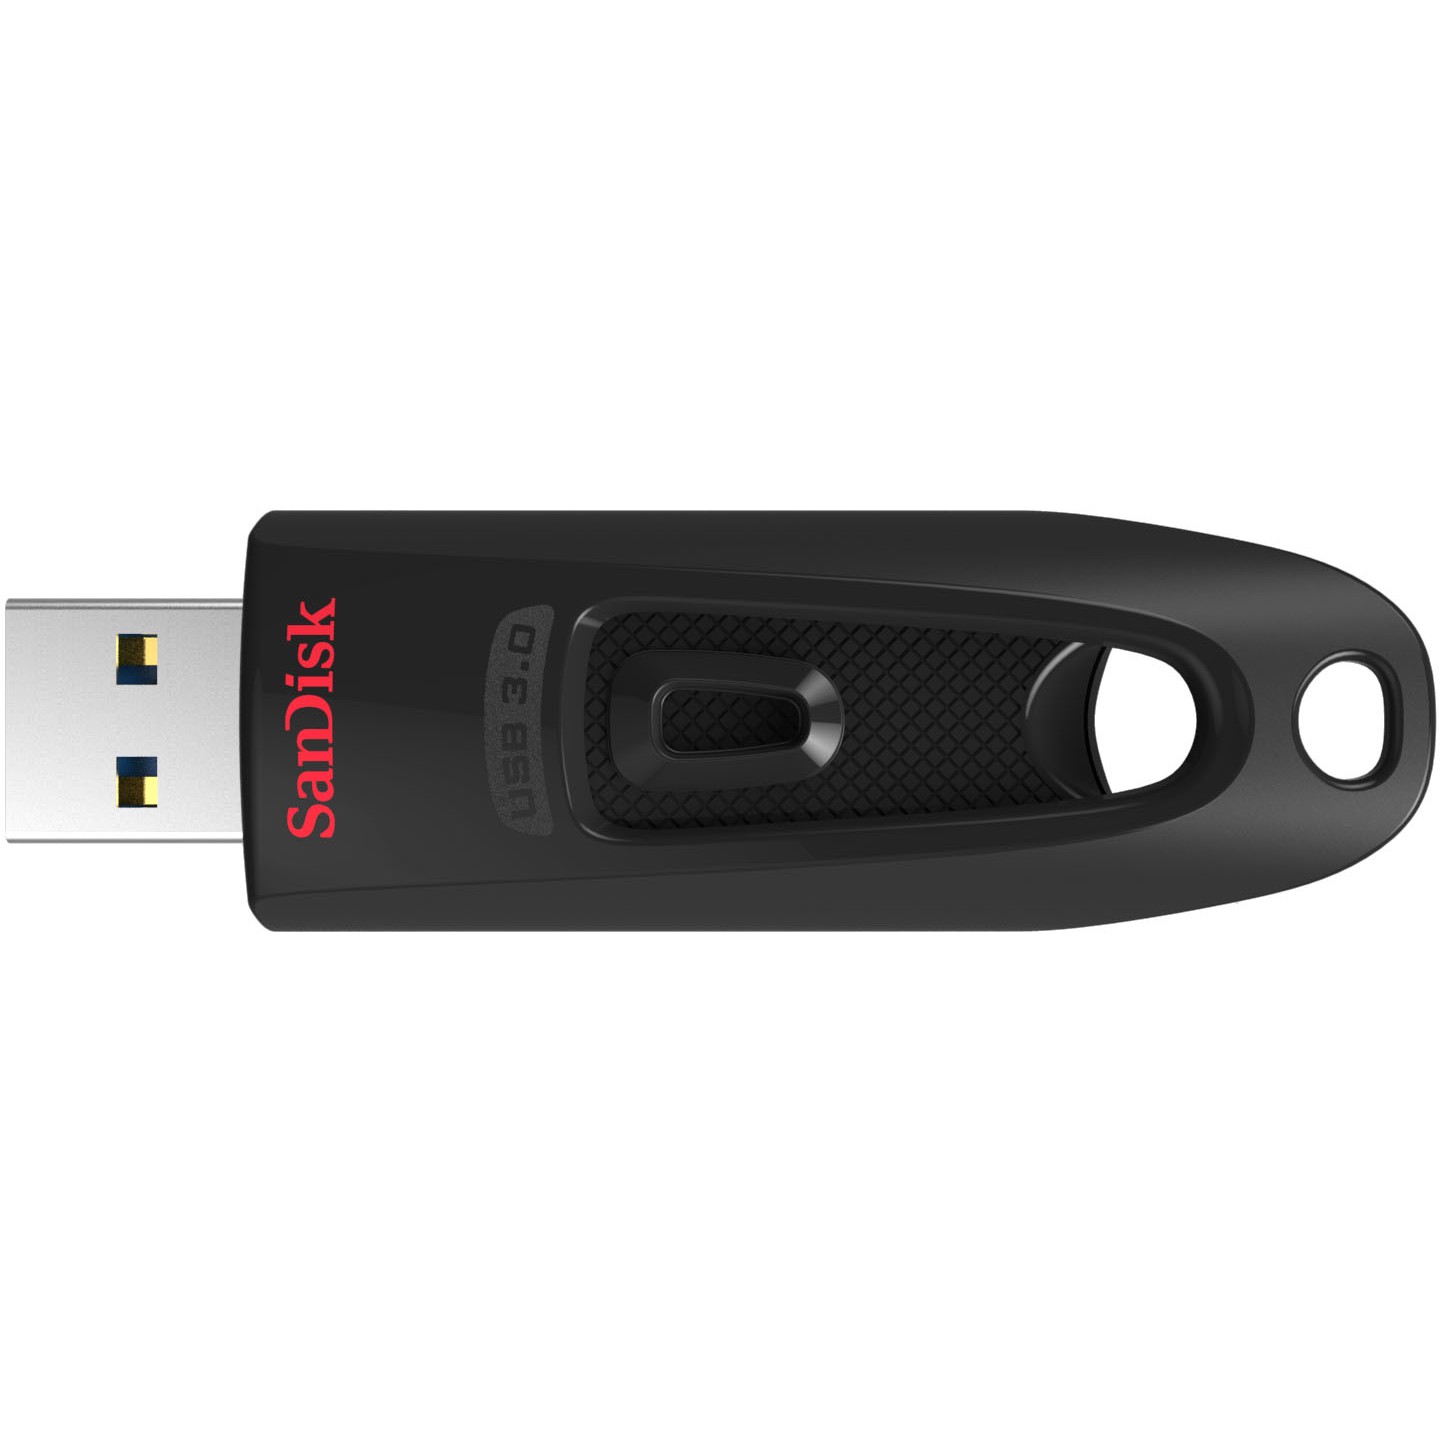 SanDisk Ultra black 256GB USB 3.0 